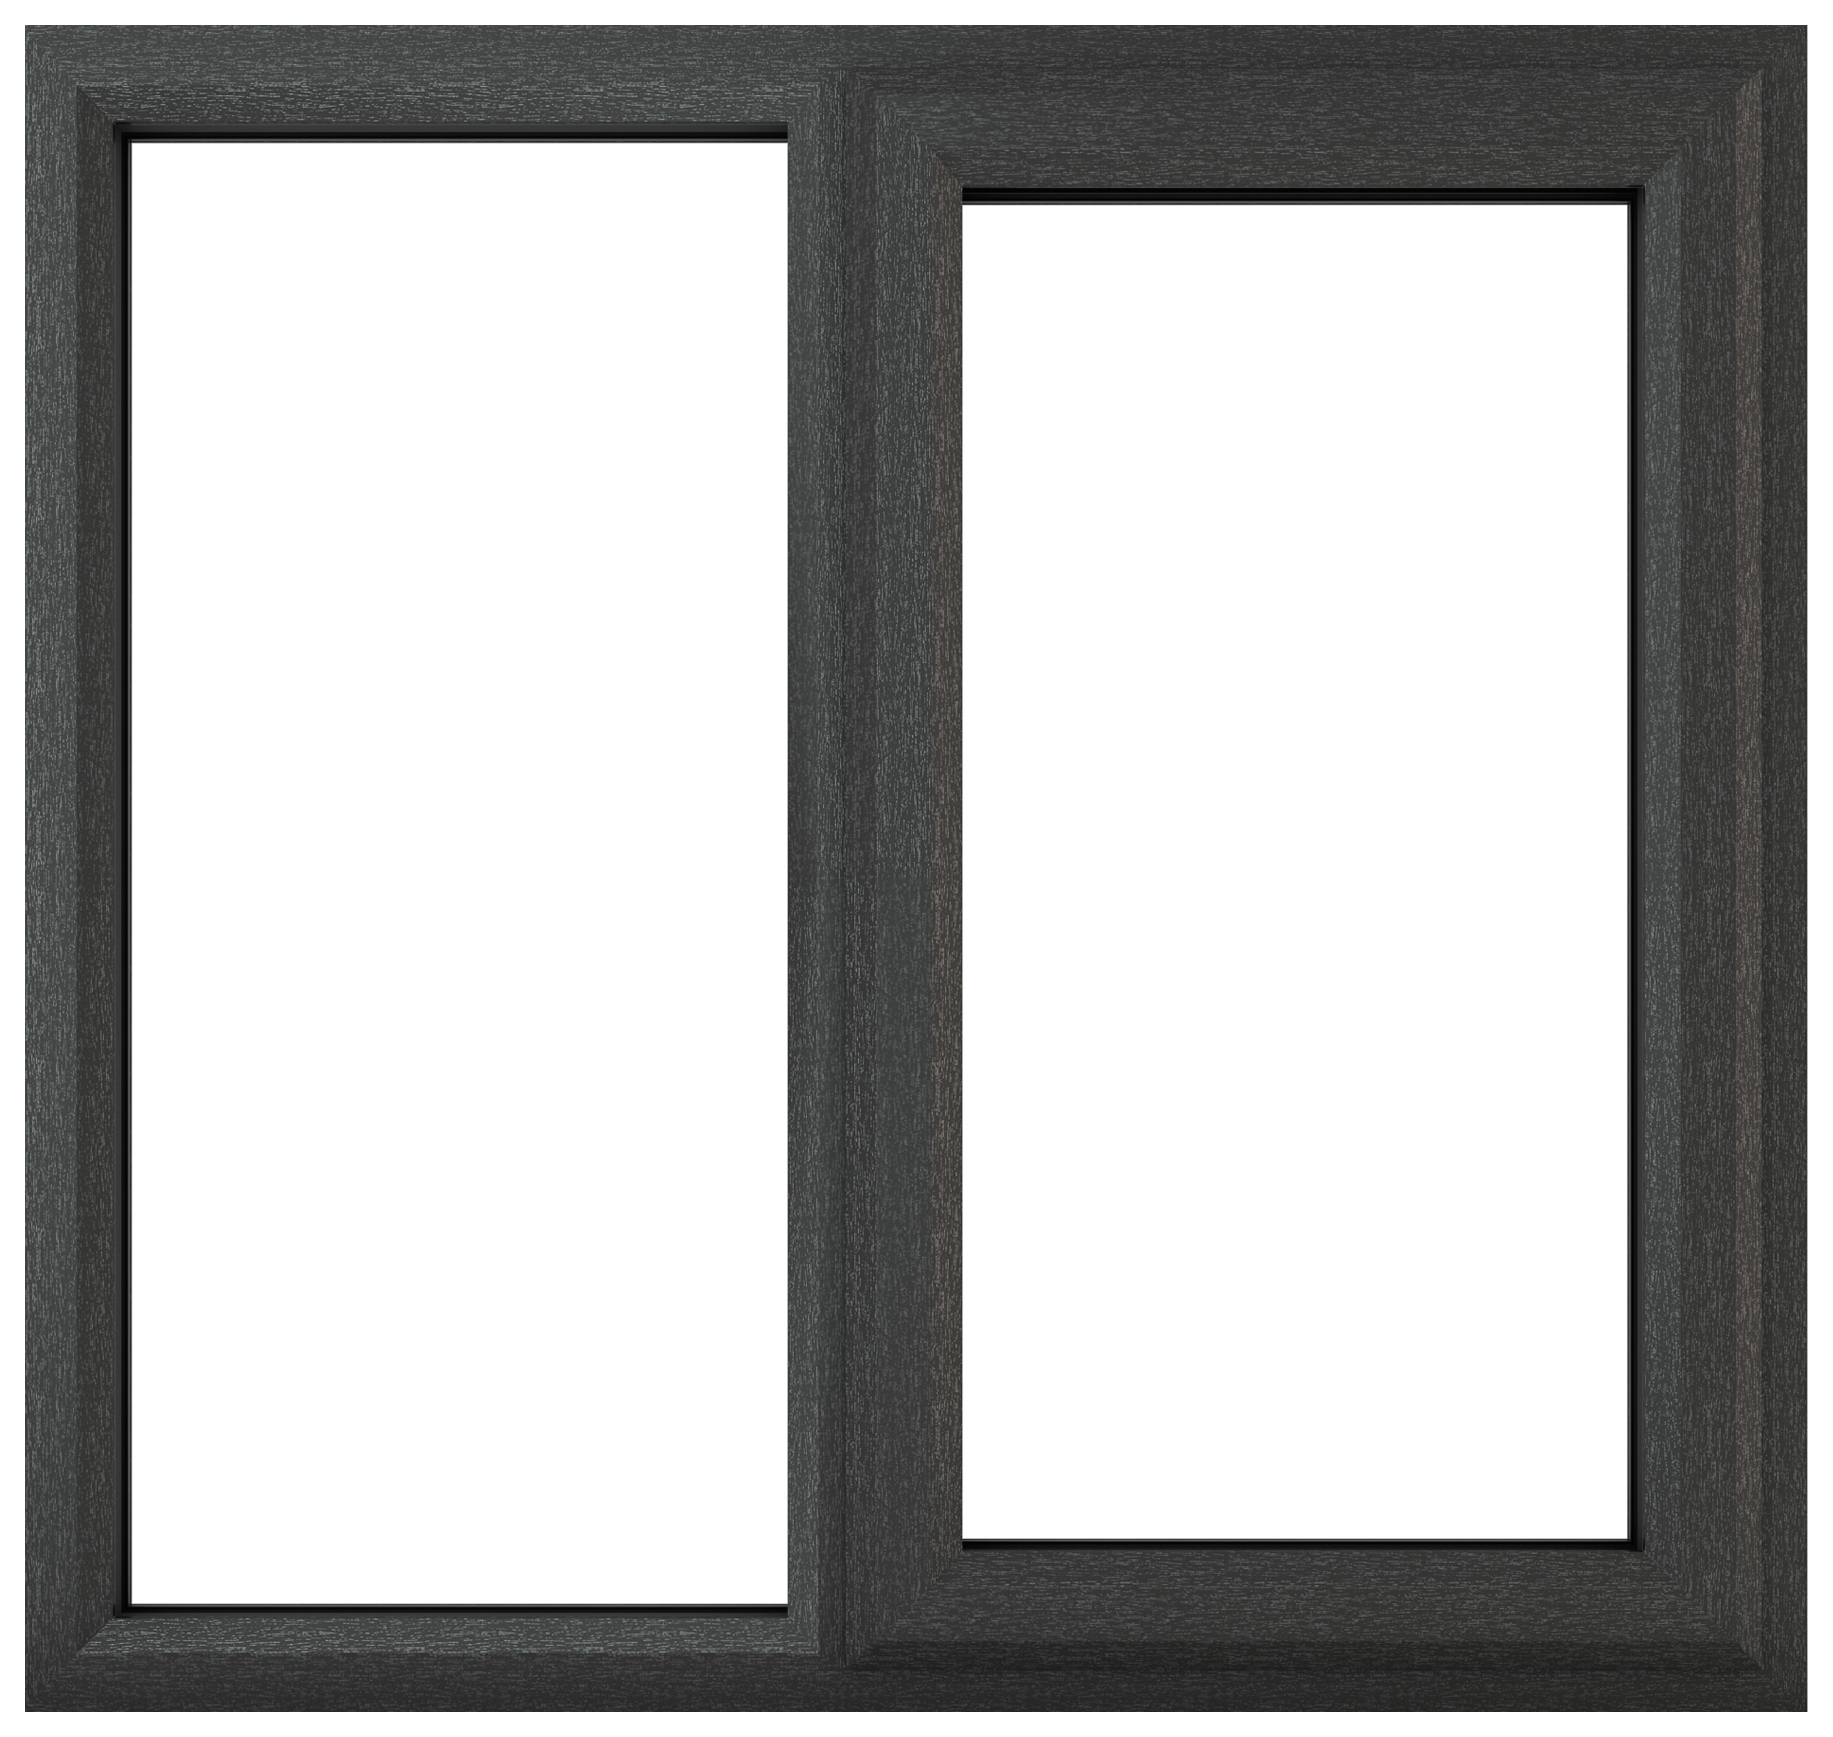 Crystal uPVC Grey / White Right Hung Clear Triple Glazed Window - 1190 x 965mm